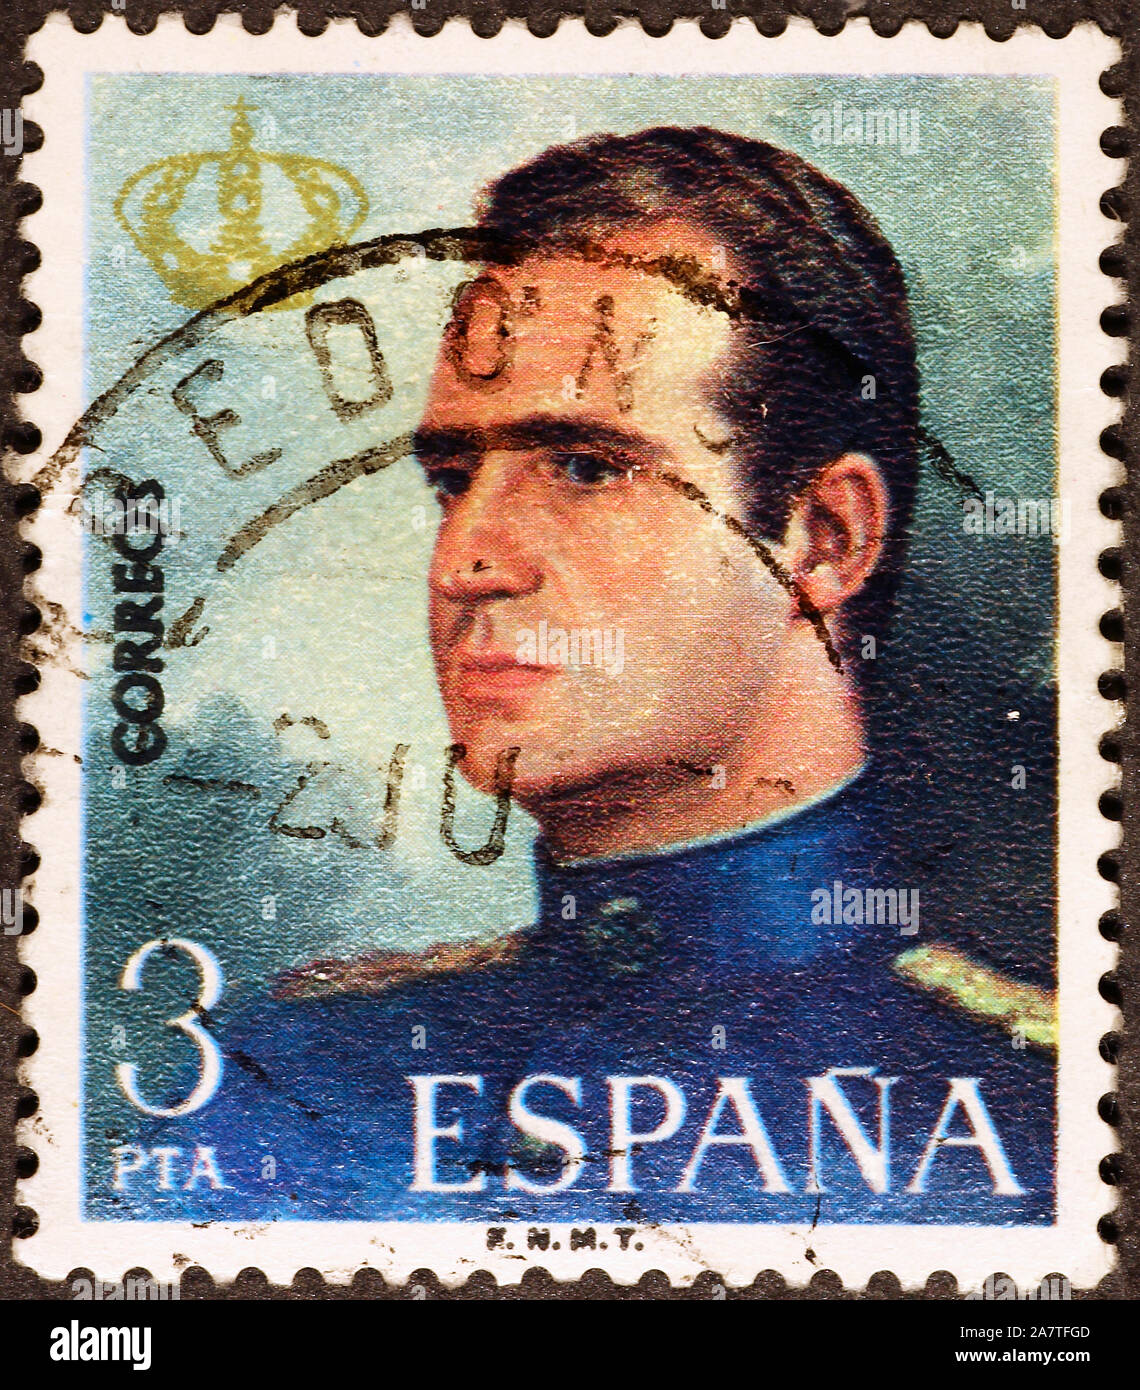 King Juan Carlos on spanish postage stamp Stock Photo